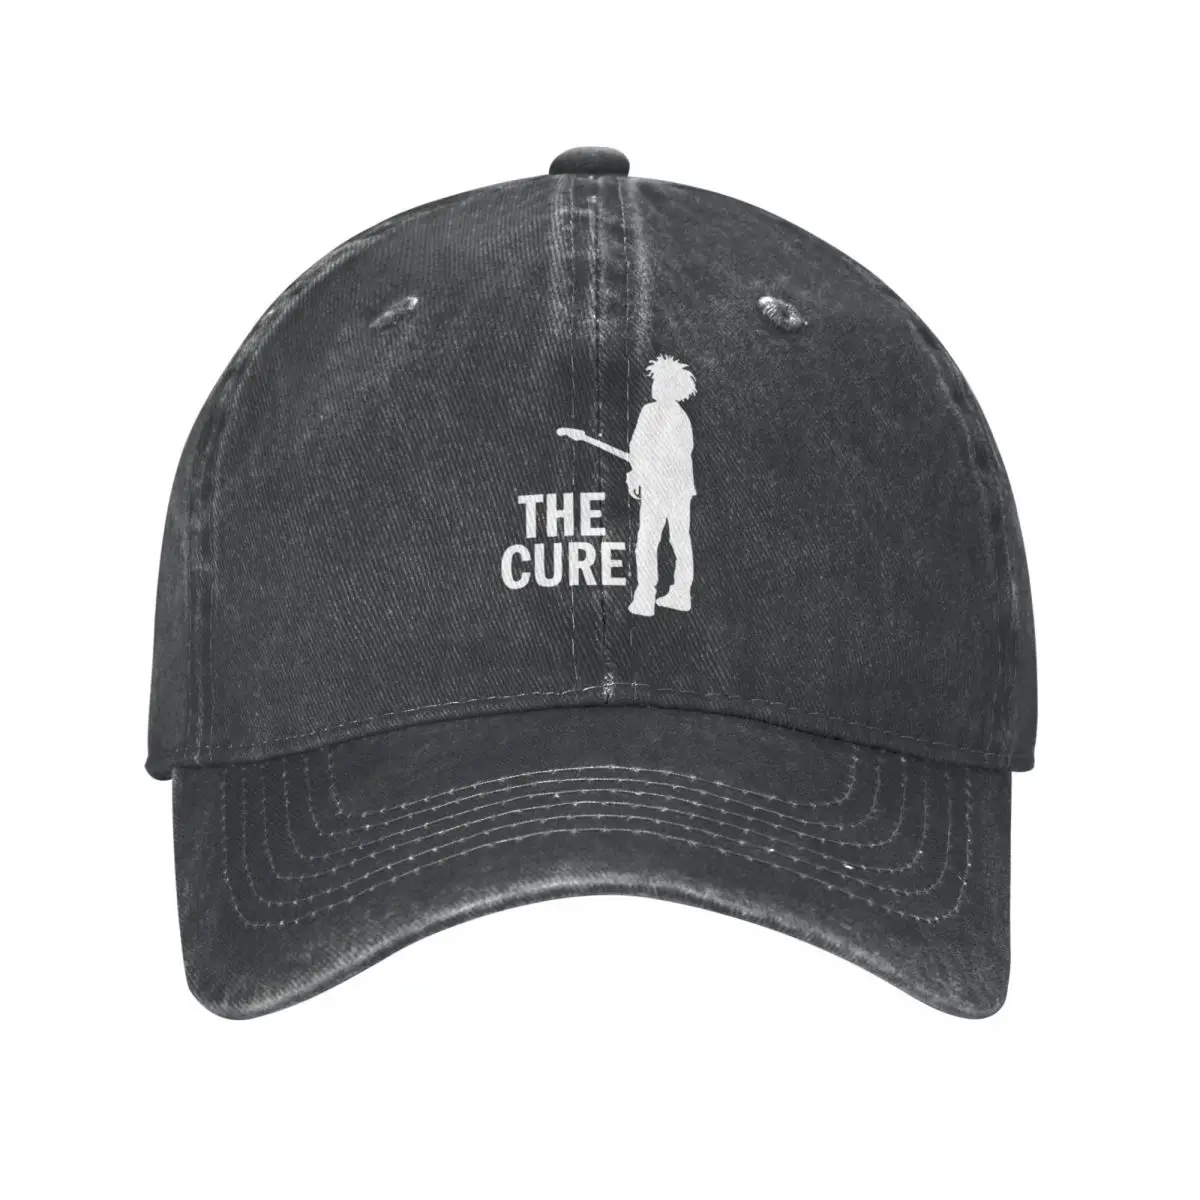 The Cure Robert Smith Logo Baseball Cap Outfit Vintage Distressed Denim Sun Cap Unisex Style Adjustable Fit Hats Cap